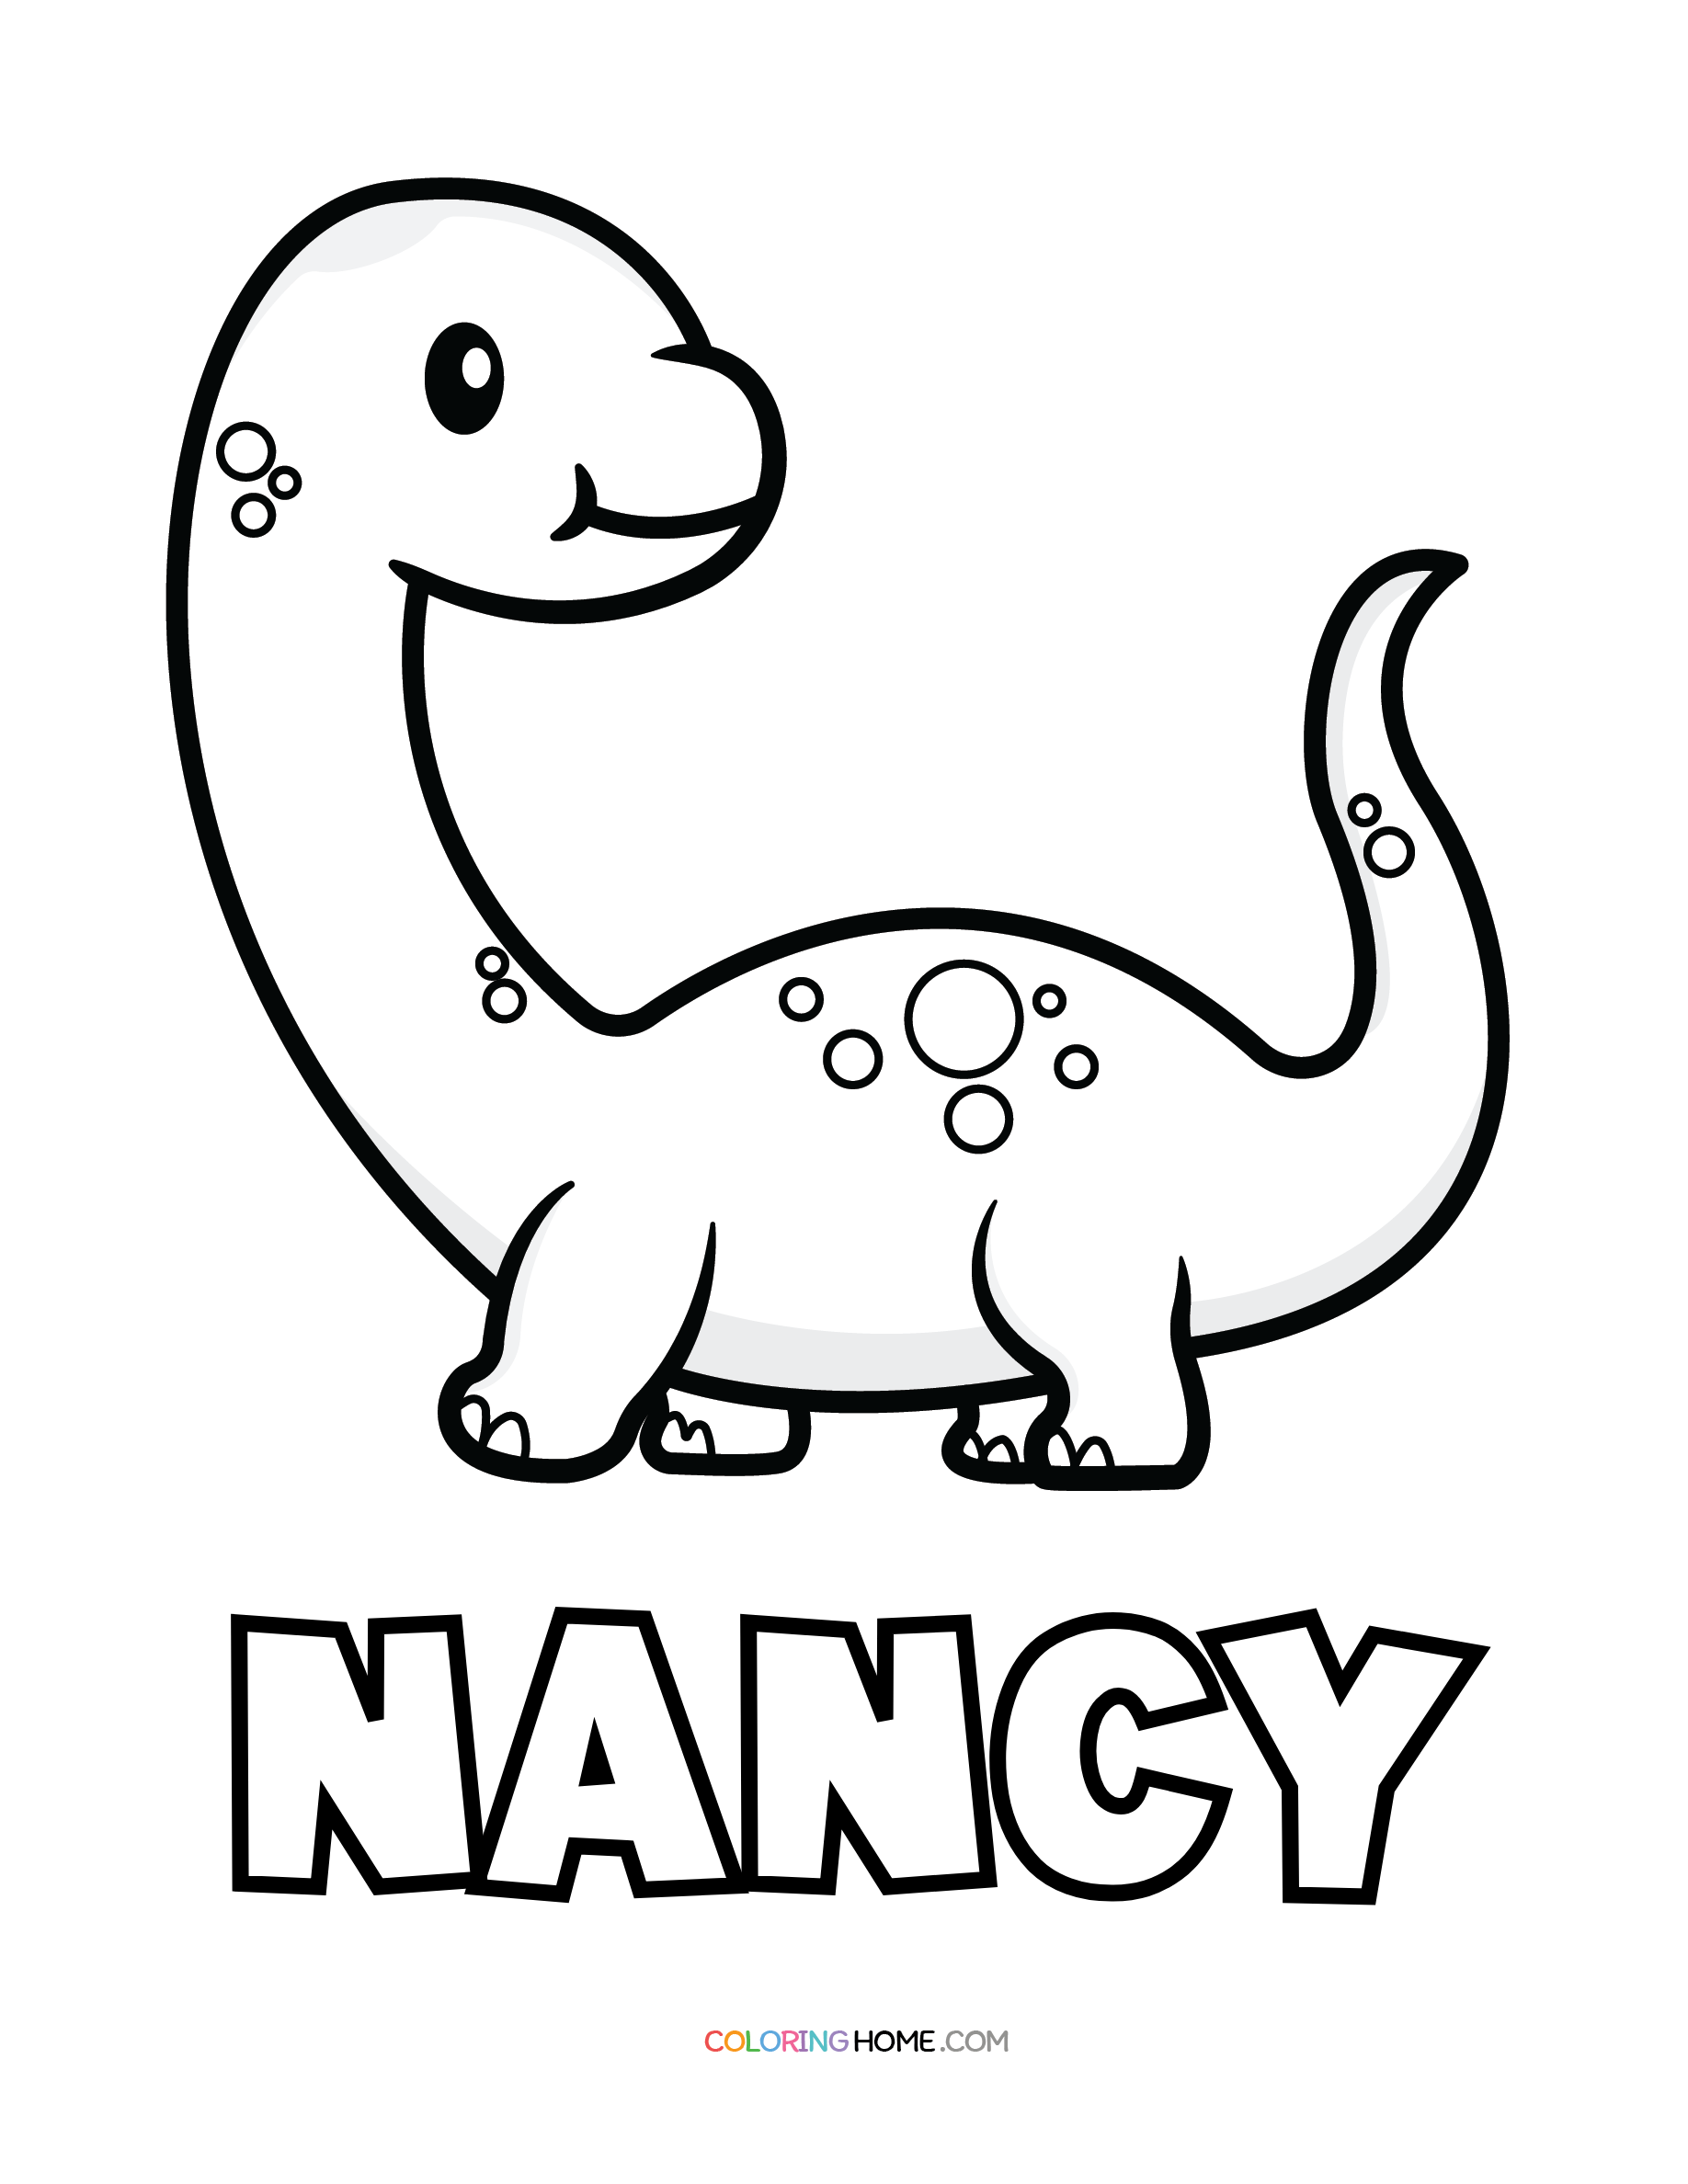 Nancy dinosaur coloring page